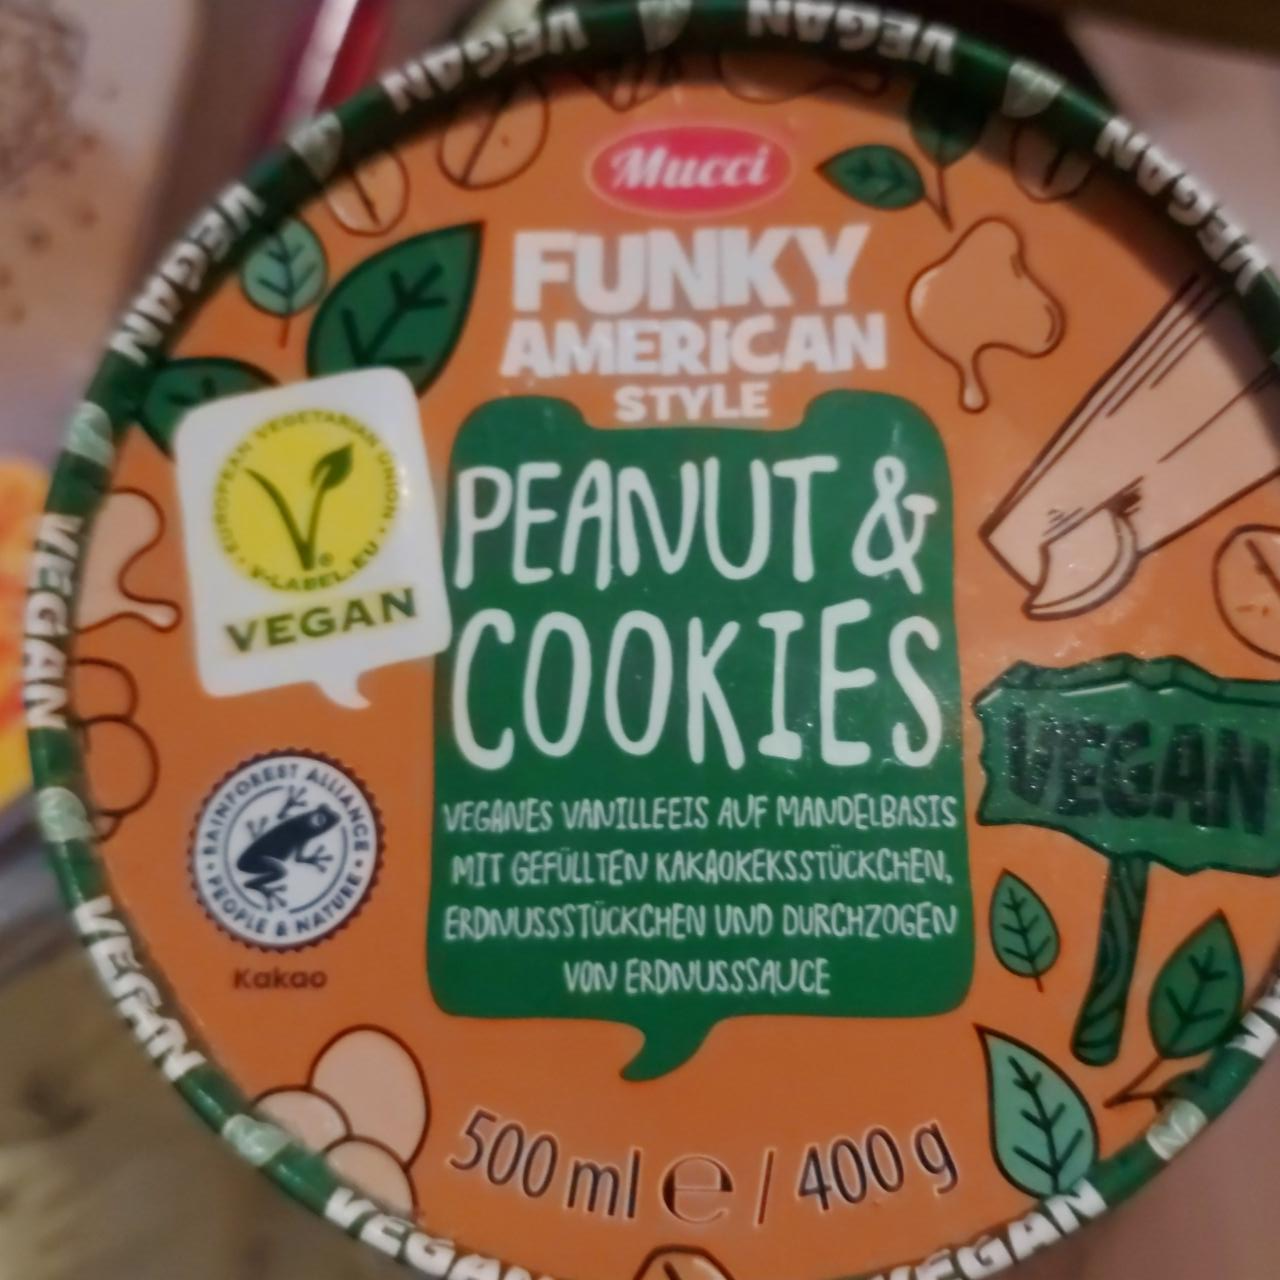 Fotografie - Funky American style Peanut & cookies ice cream vegan Mucci